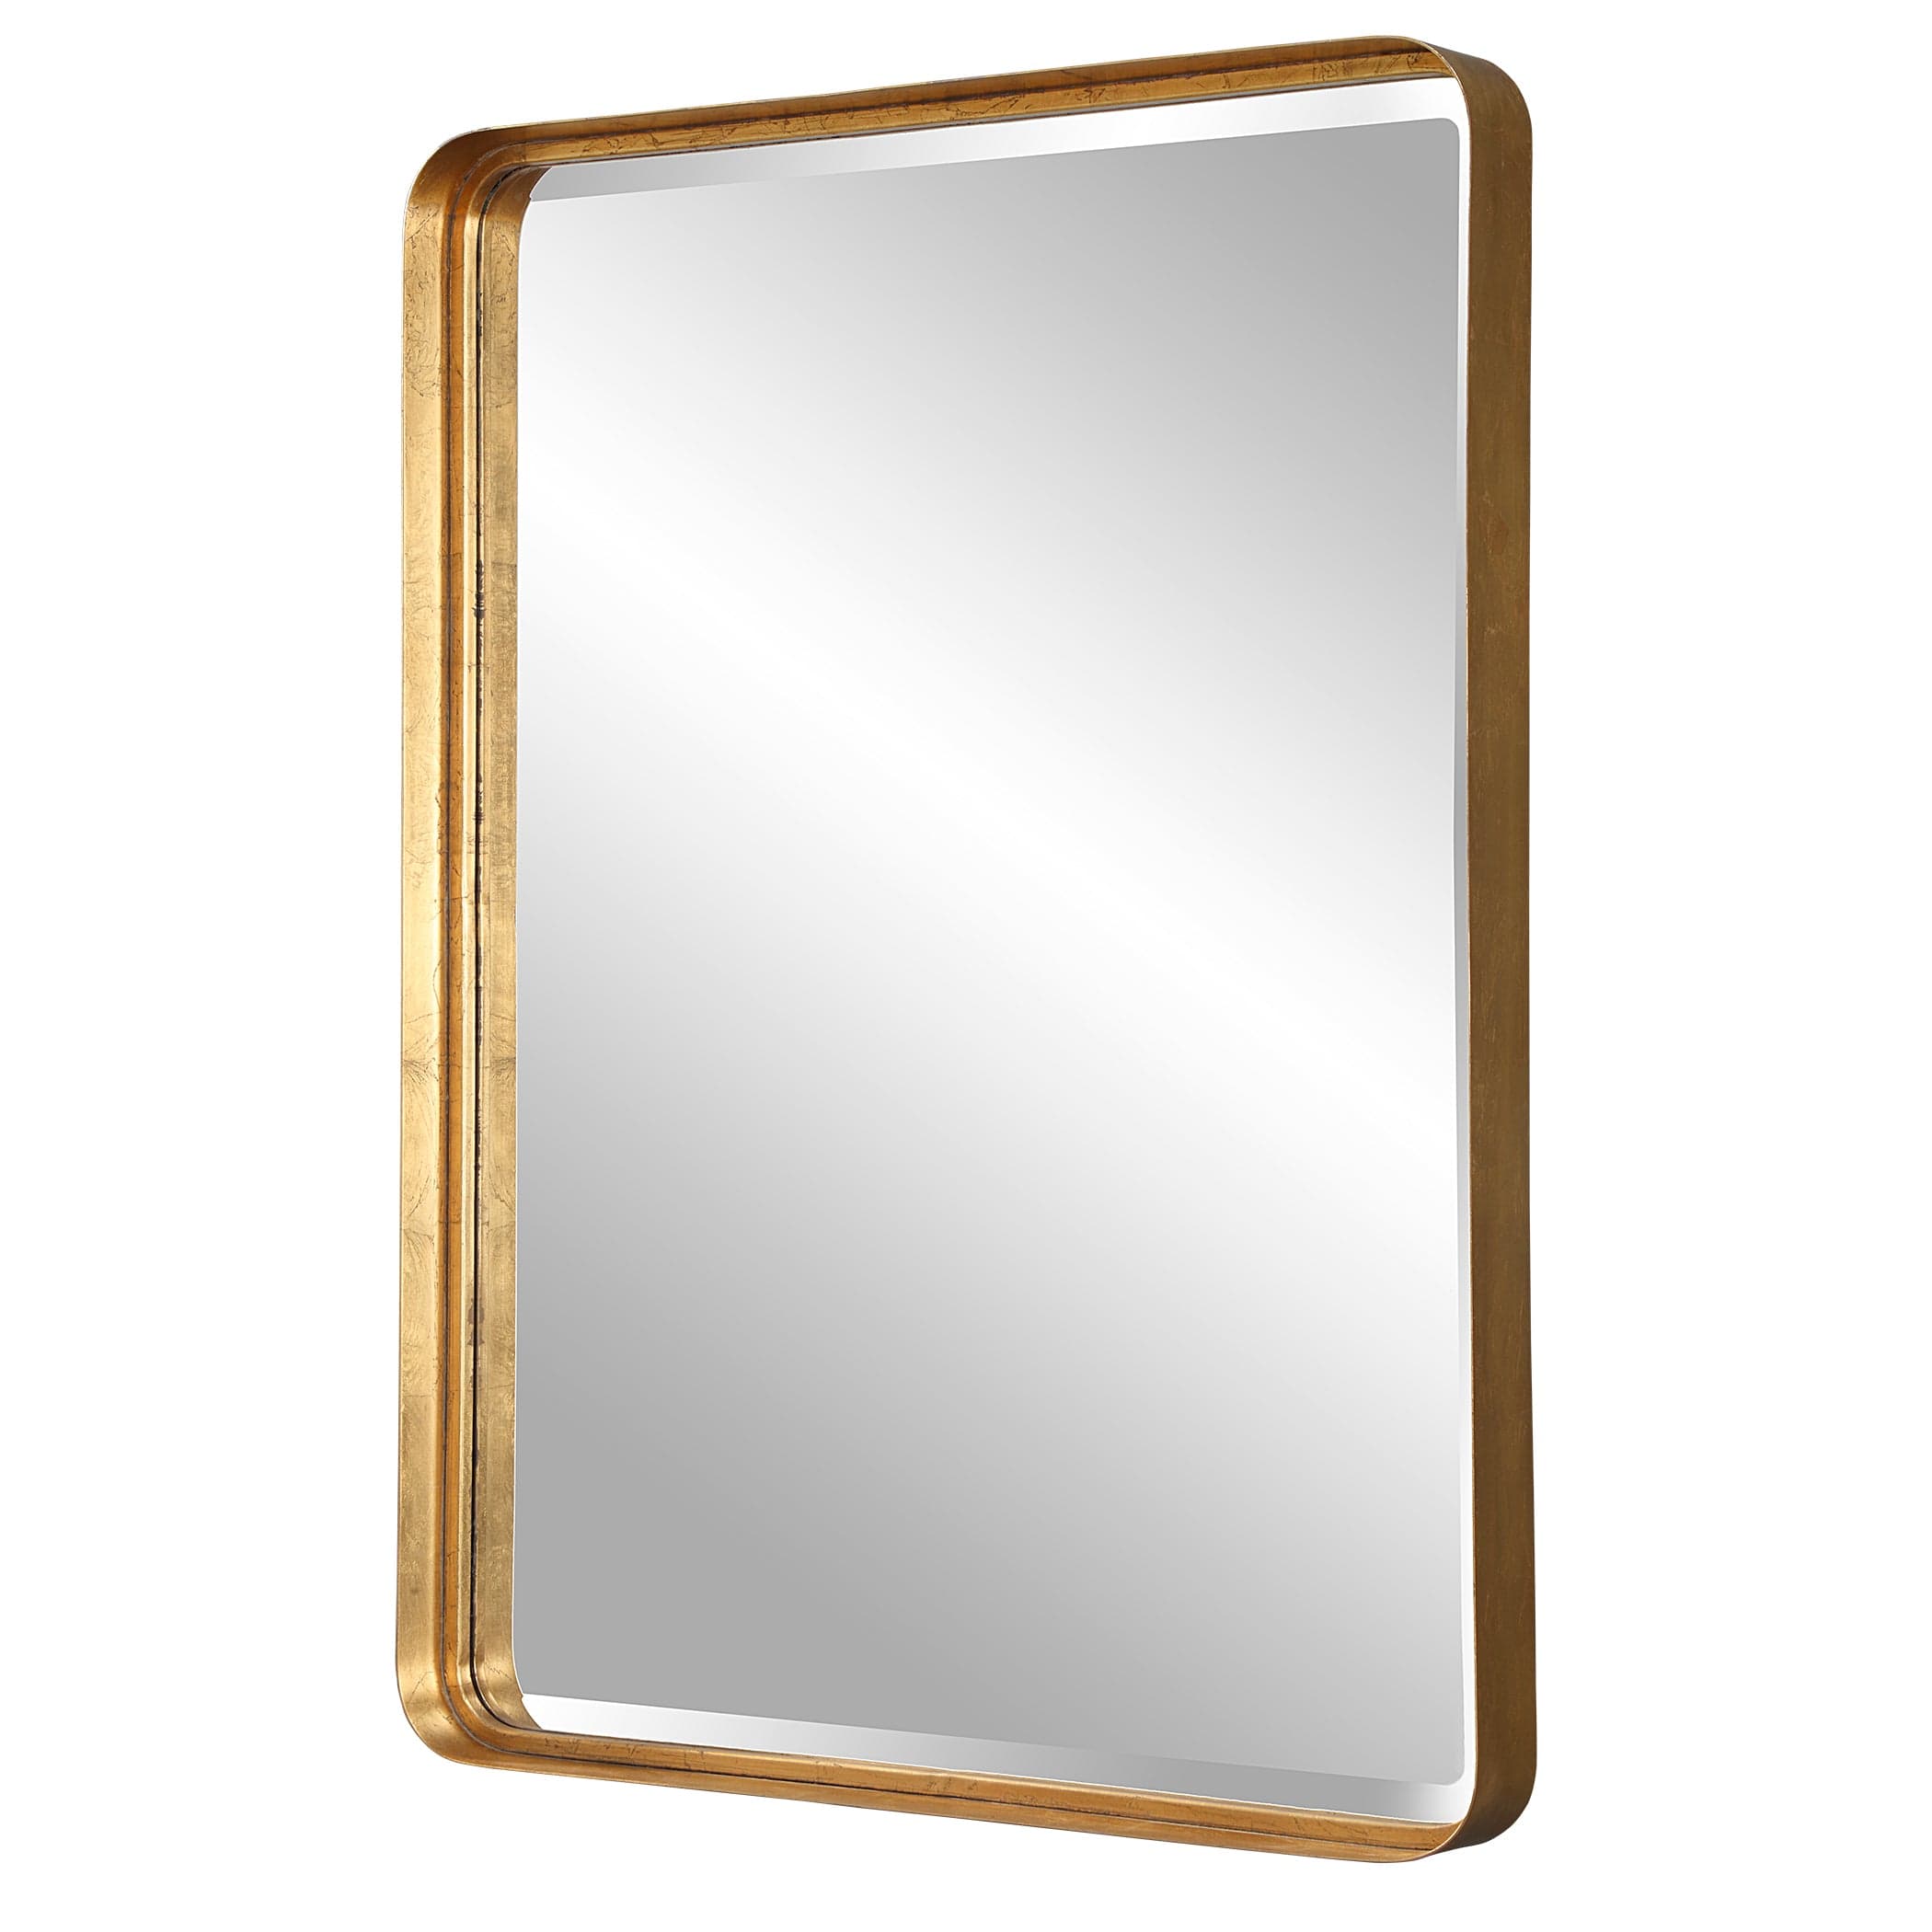 Crofton Gold Large Mirror Uttermost